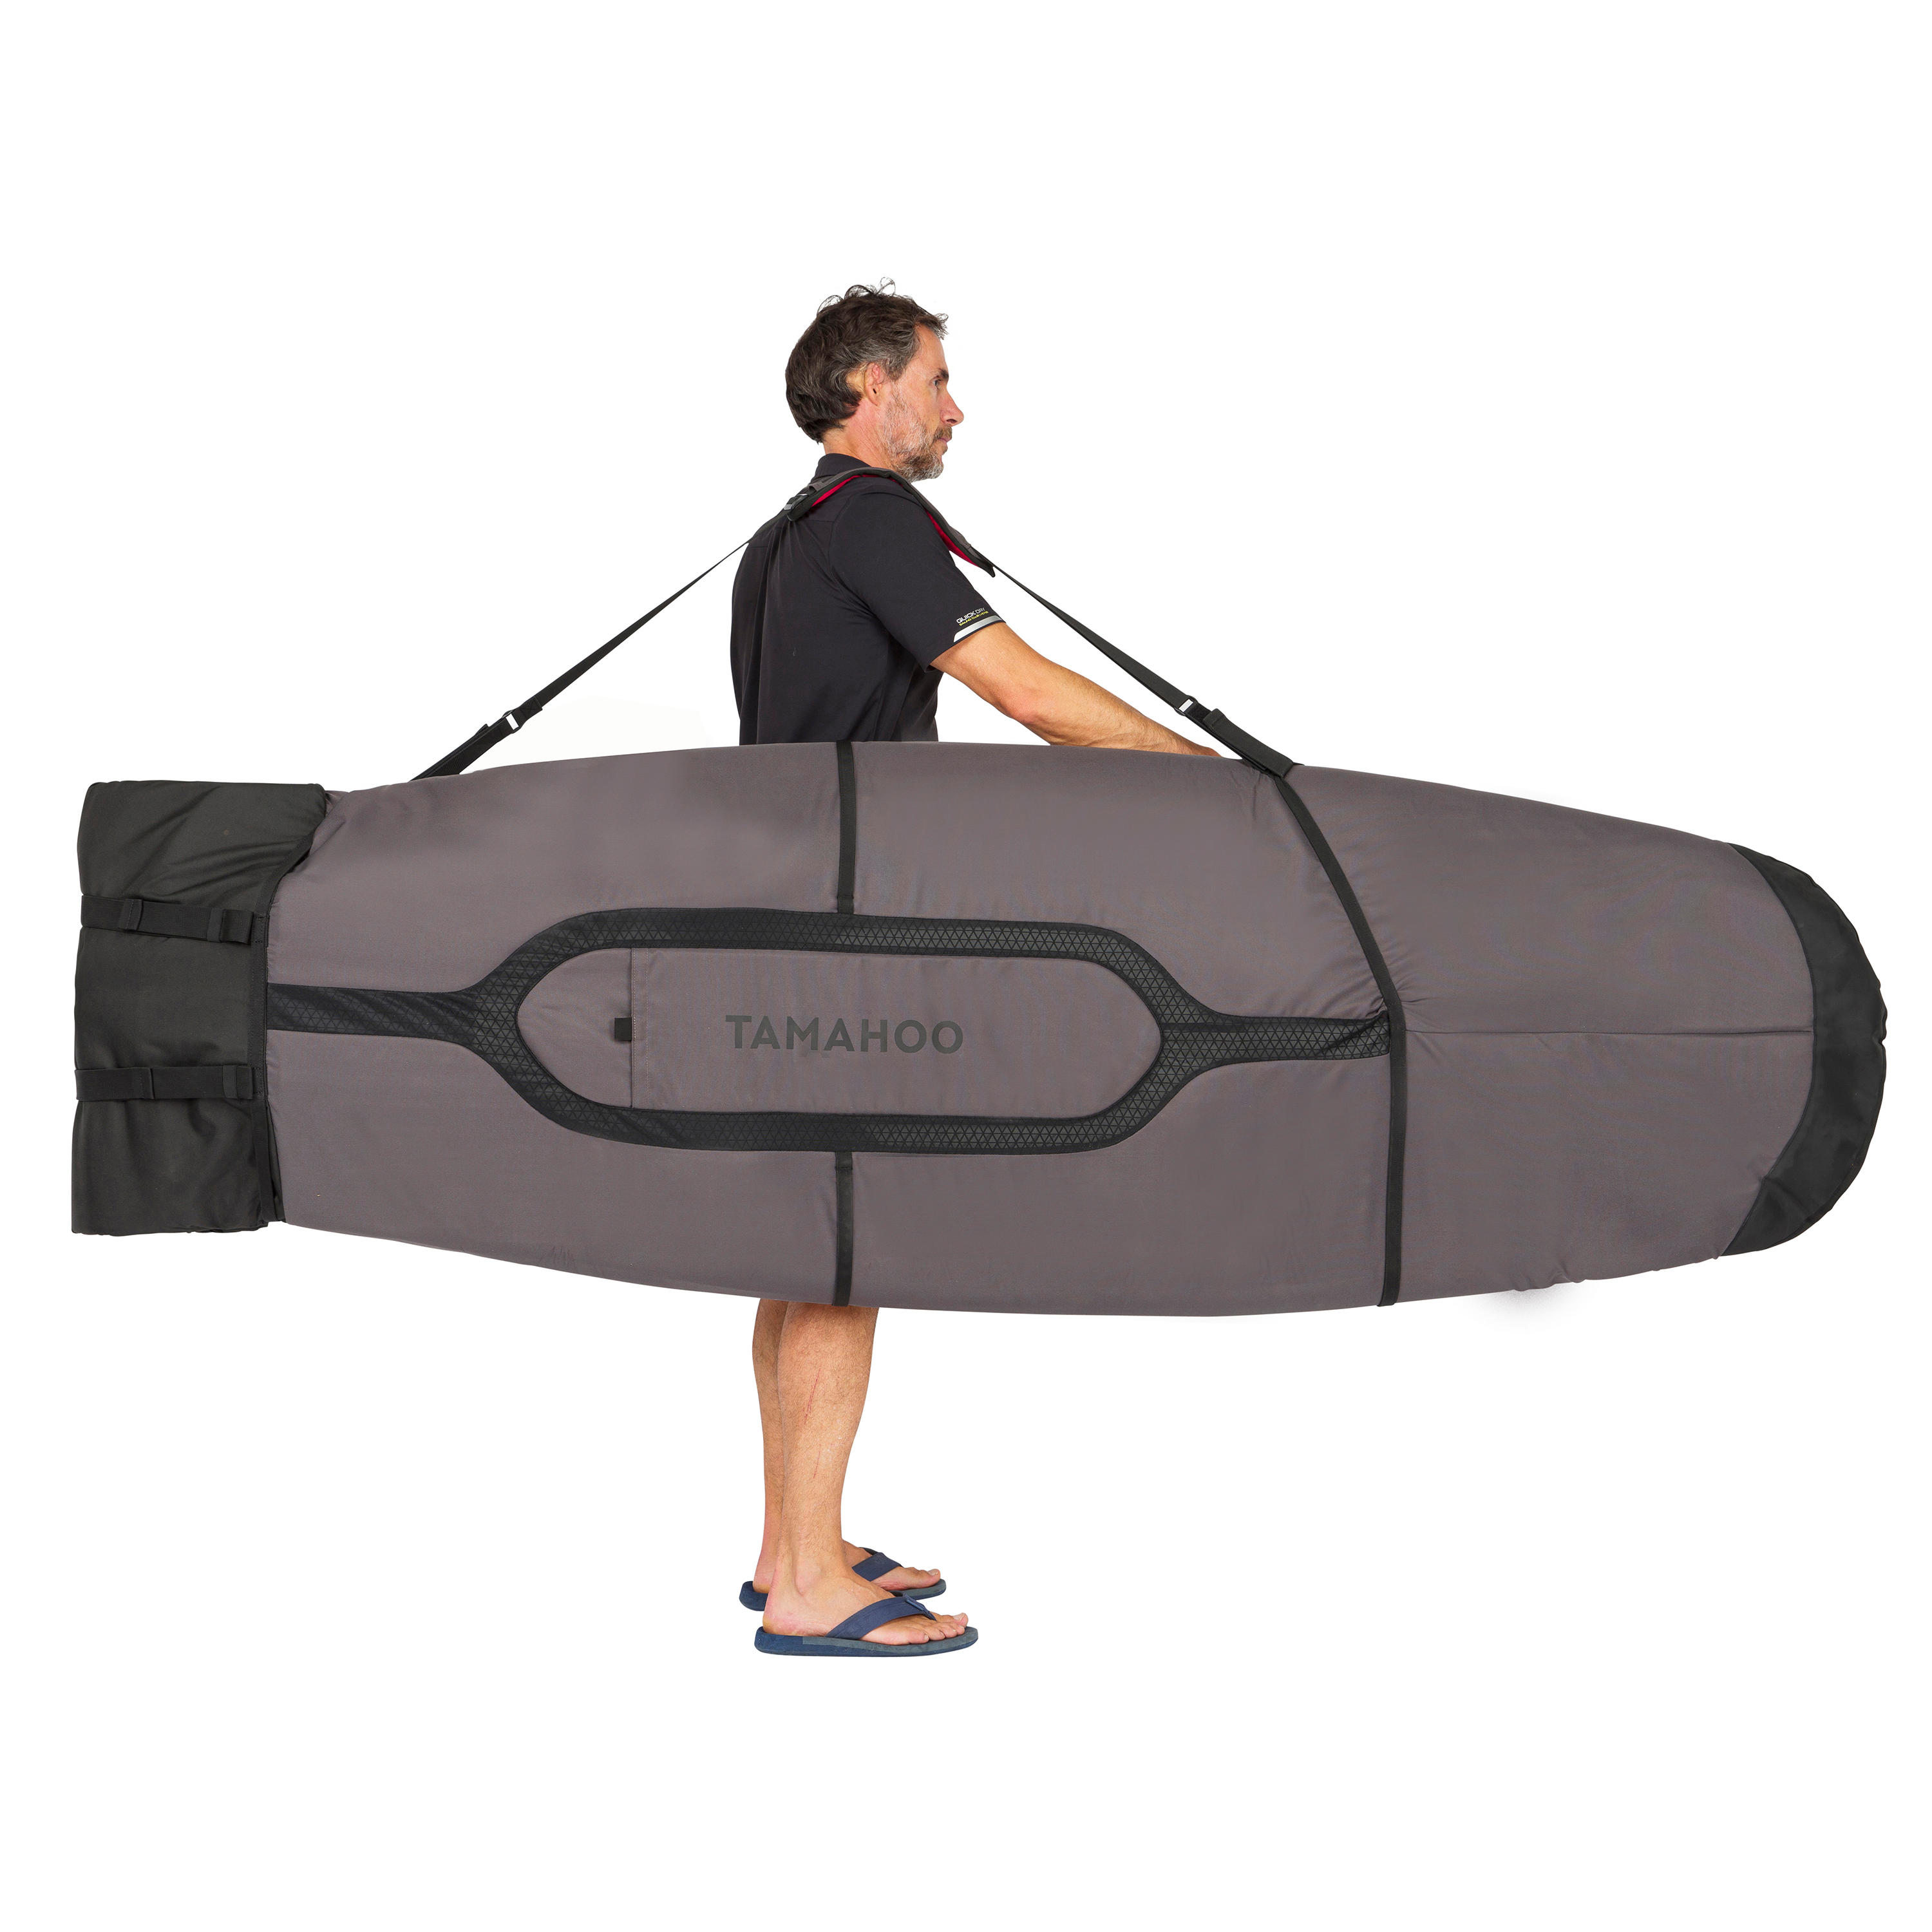 decathlon surf bag